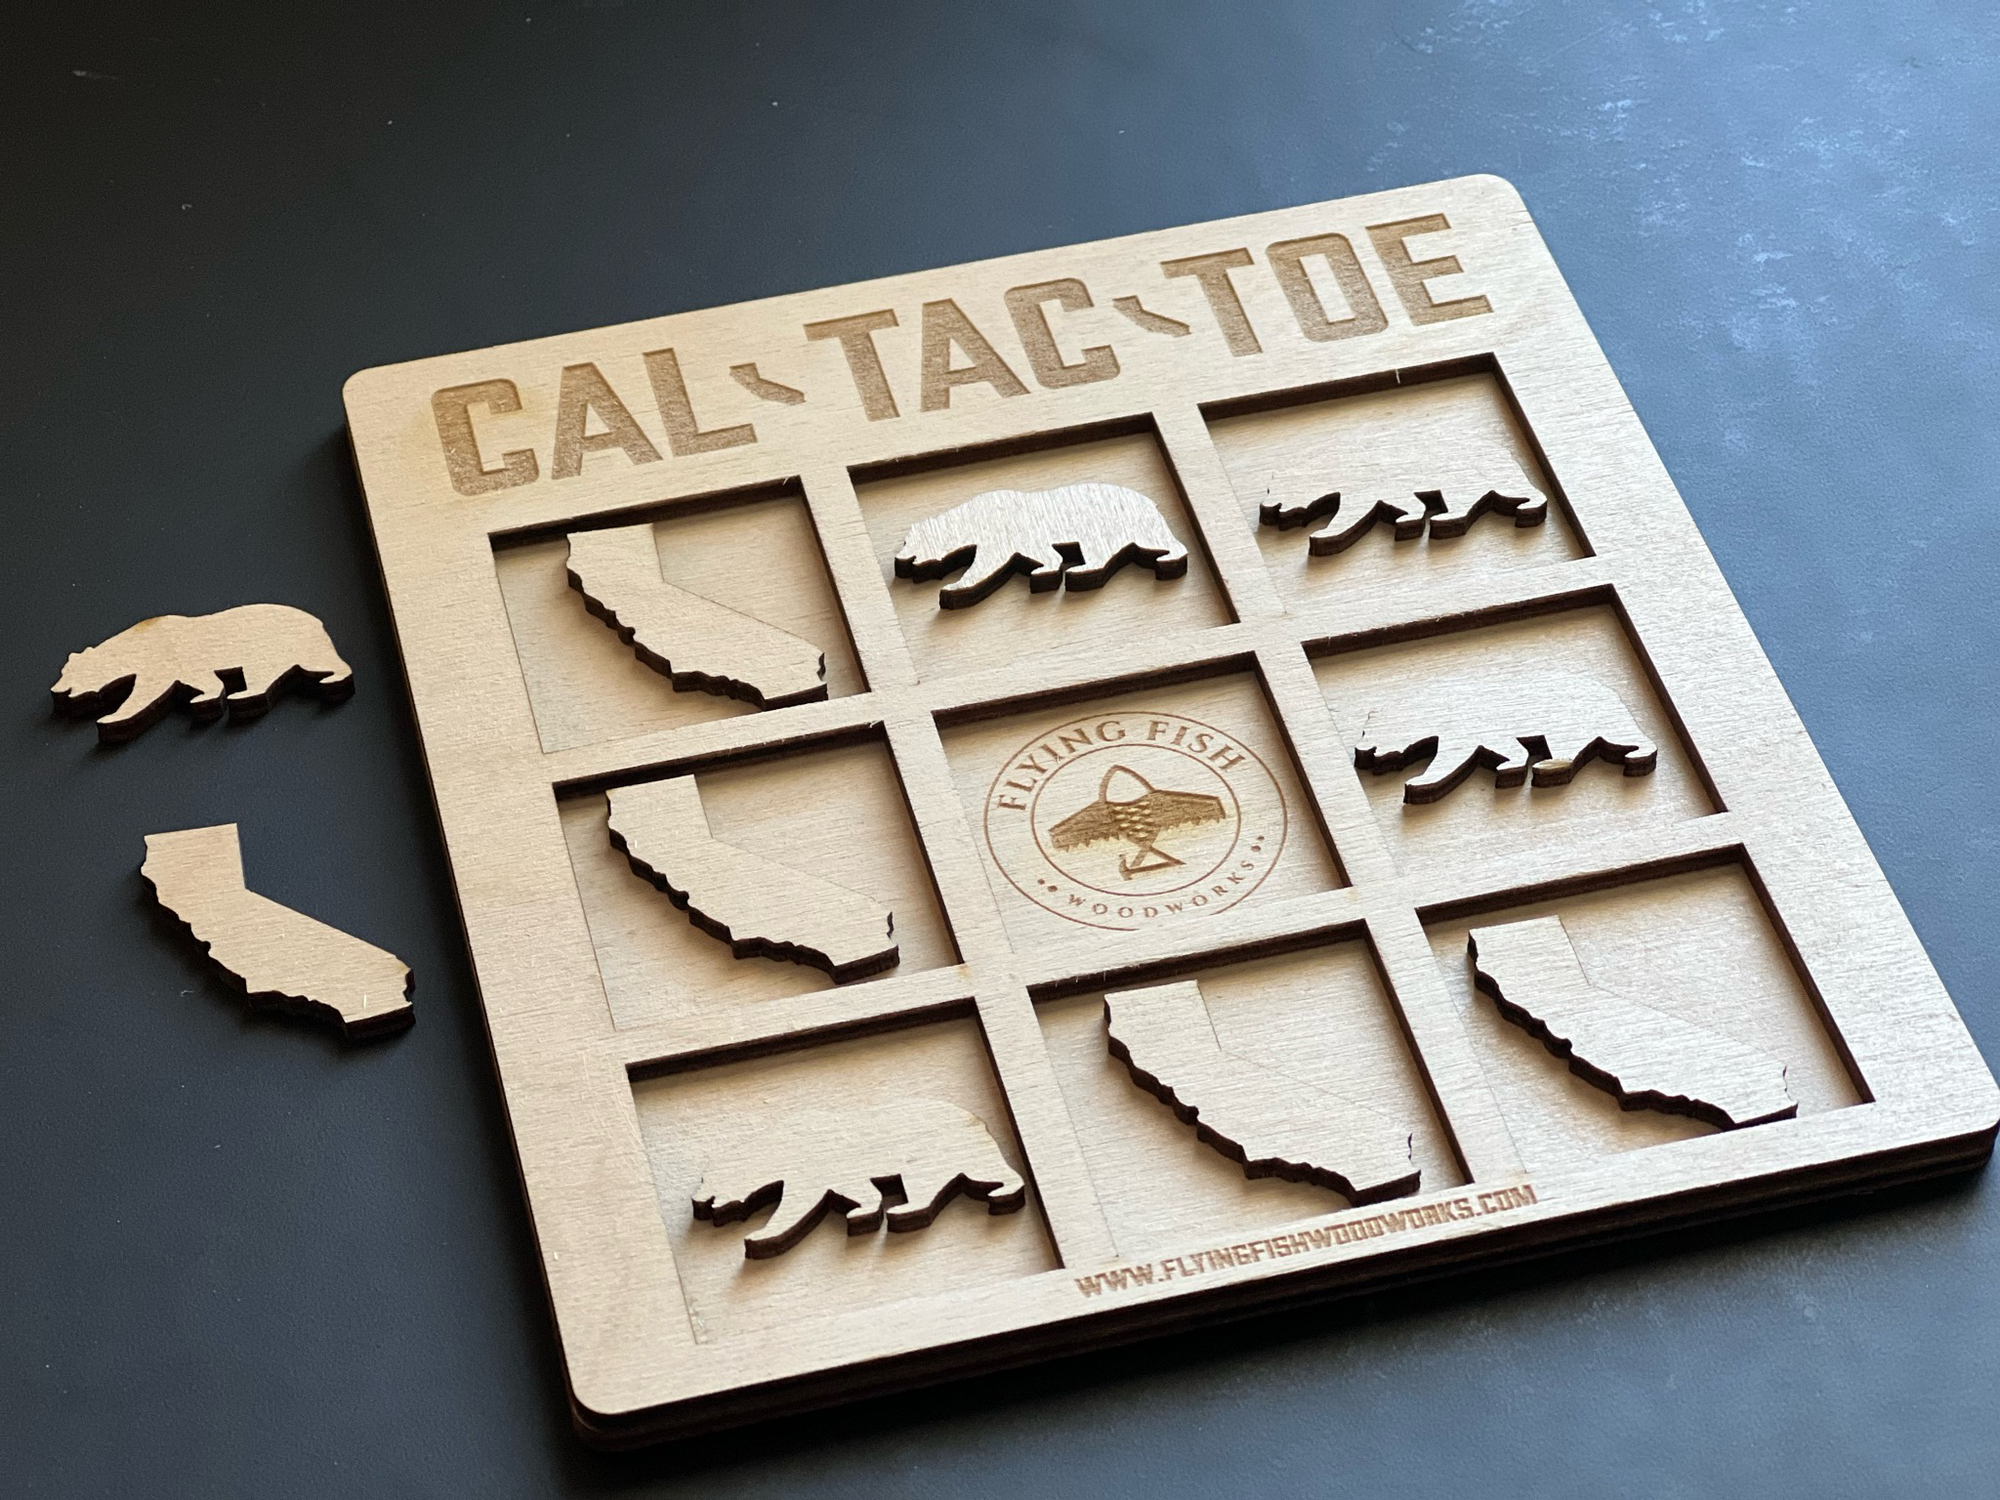 California Themed Cal-Tac-Toe (Tic Tac Toe)